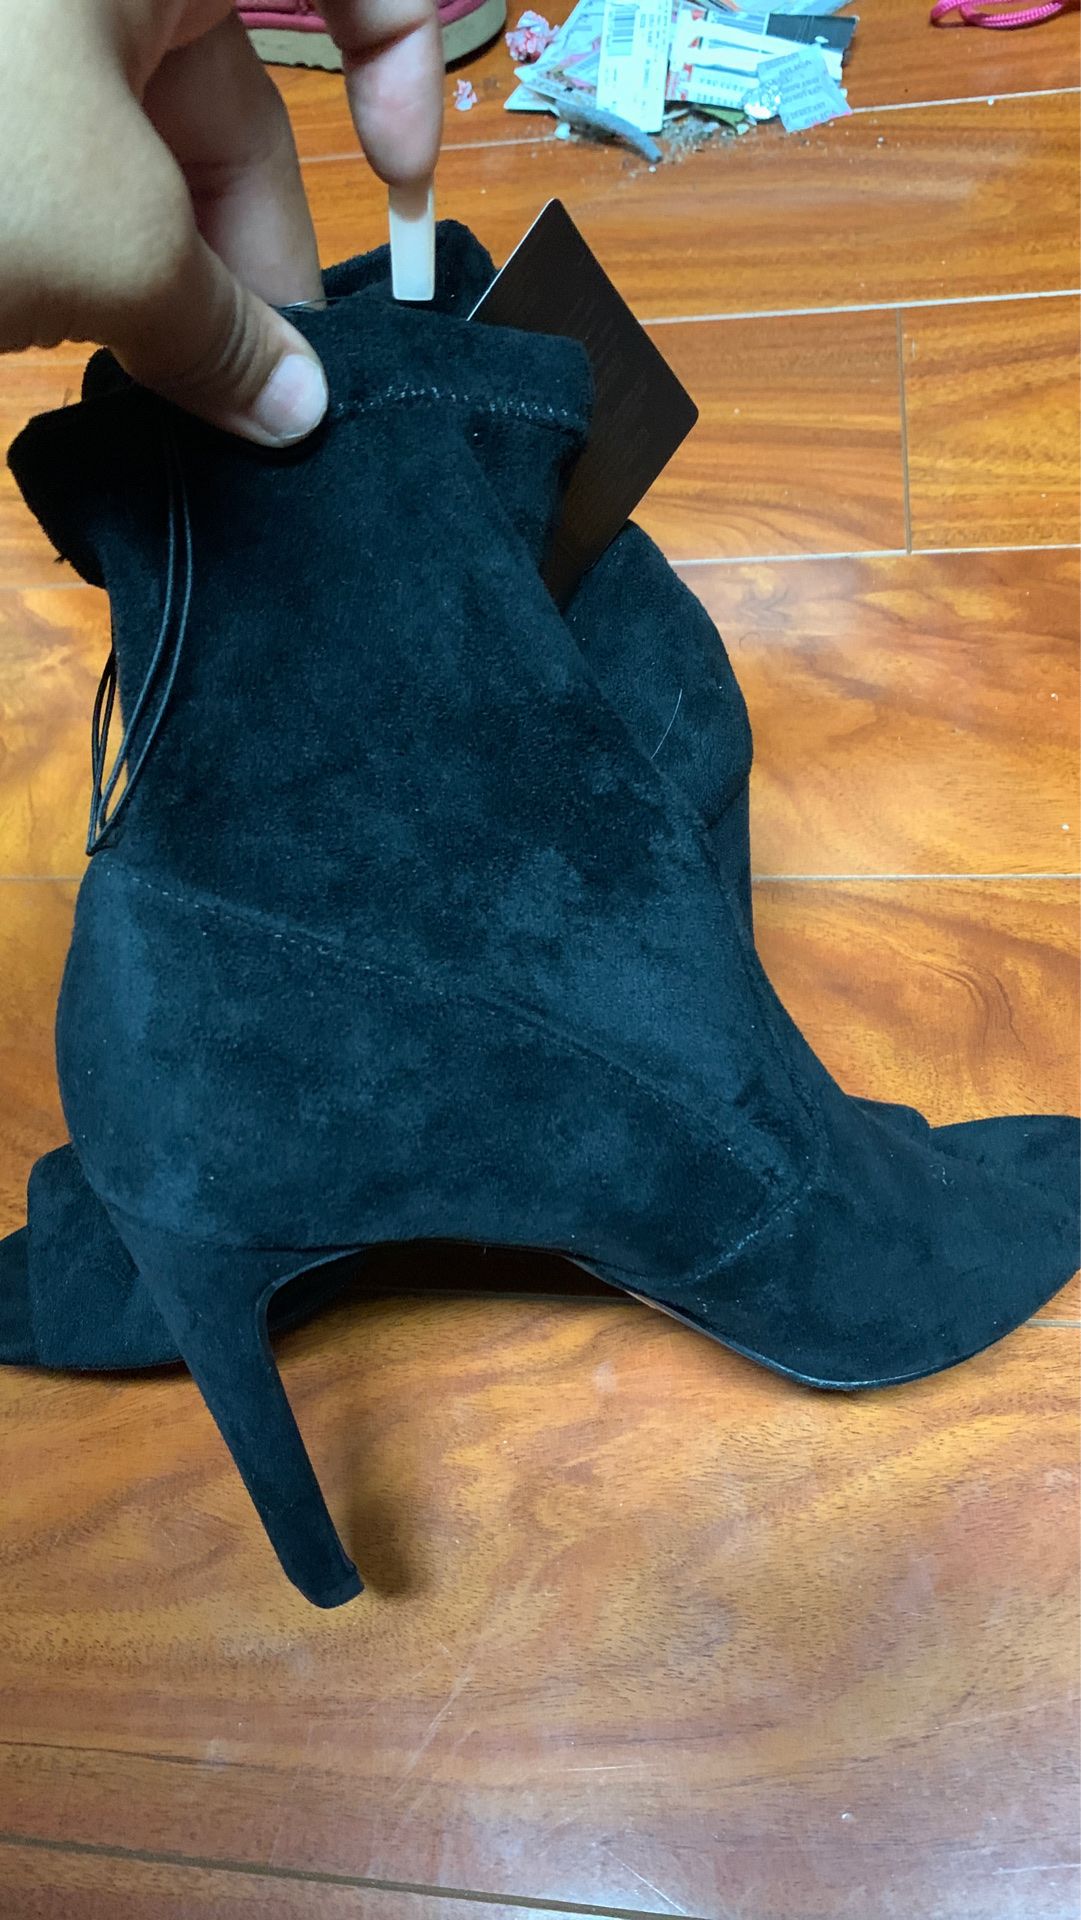 Brand New Black Socks Boots - Size 9